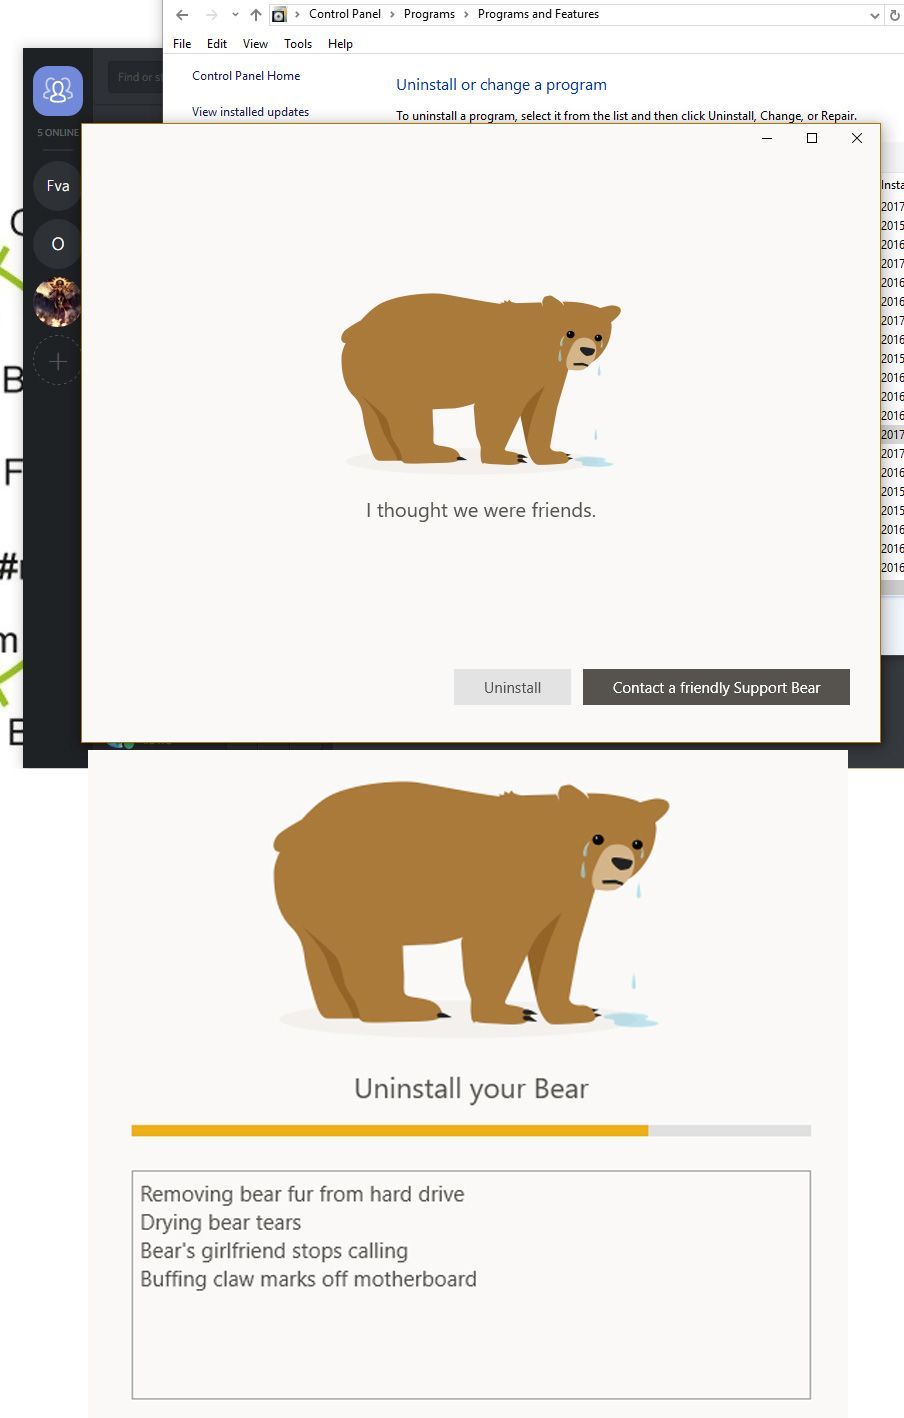 That poor bear